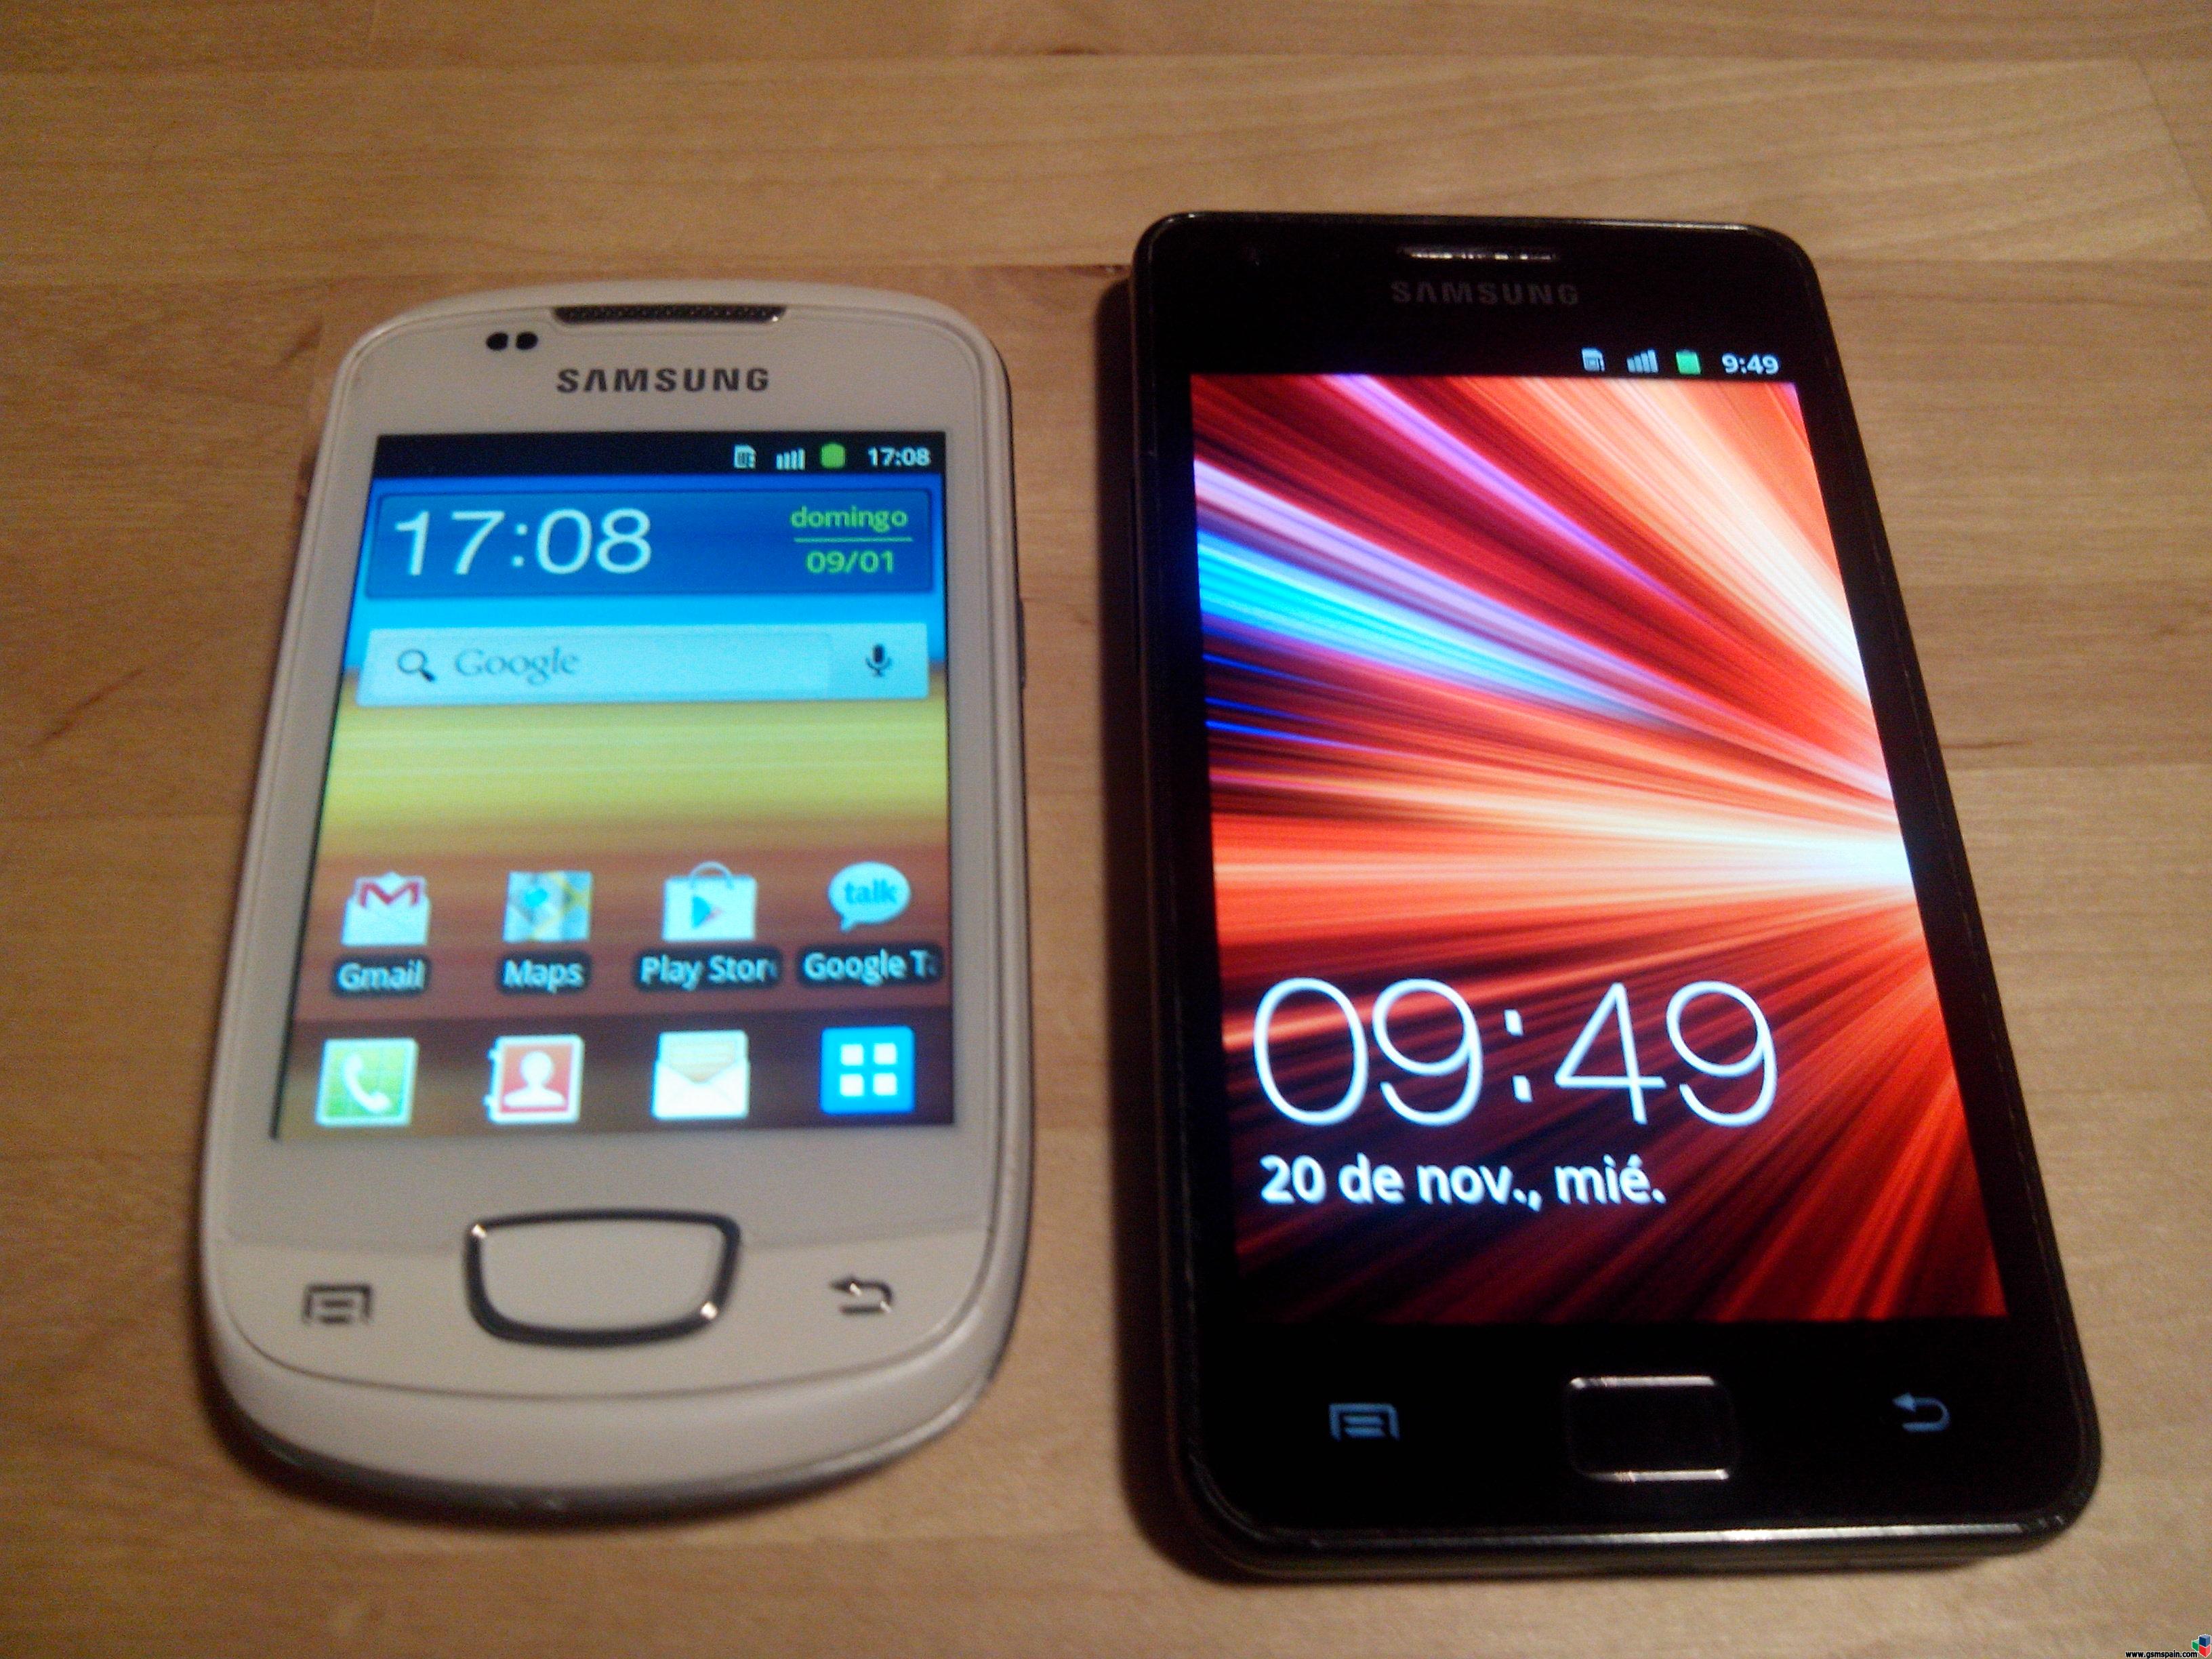 [VENDO] PACK de Samsung Galaxy SII y Galaxy Mini. OFERTN!!!